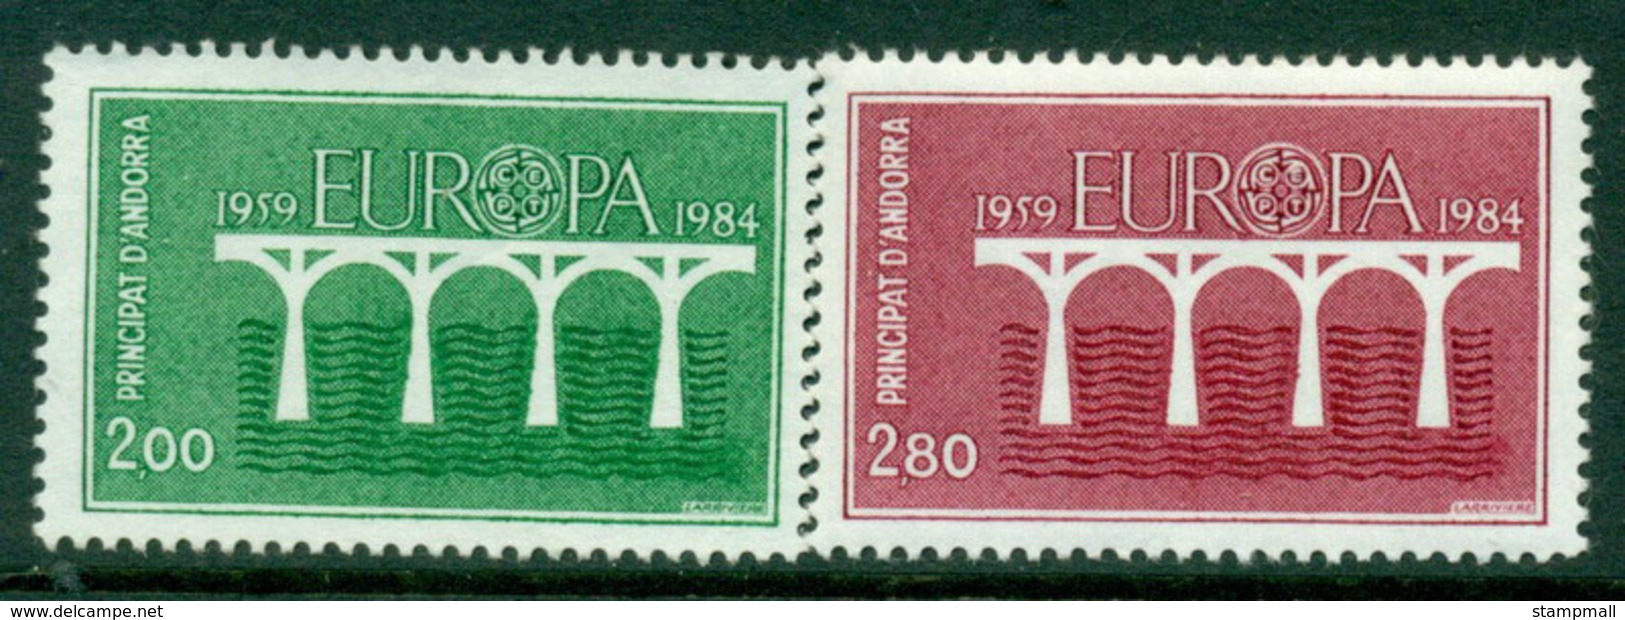 Andorra (Fr) 1984 Europa MUH Lot16023 - Unused Stamps